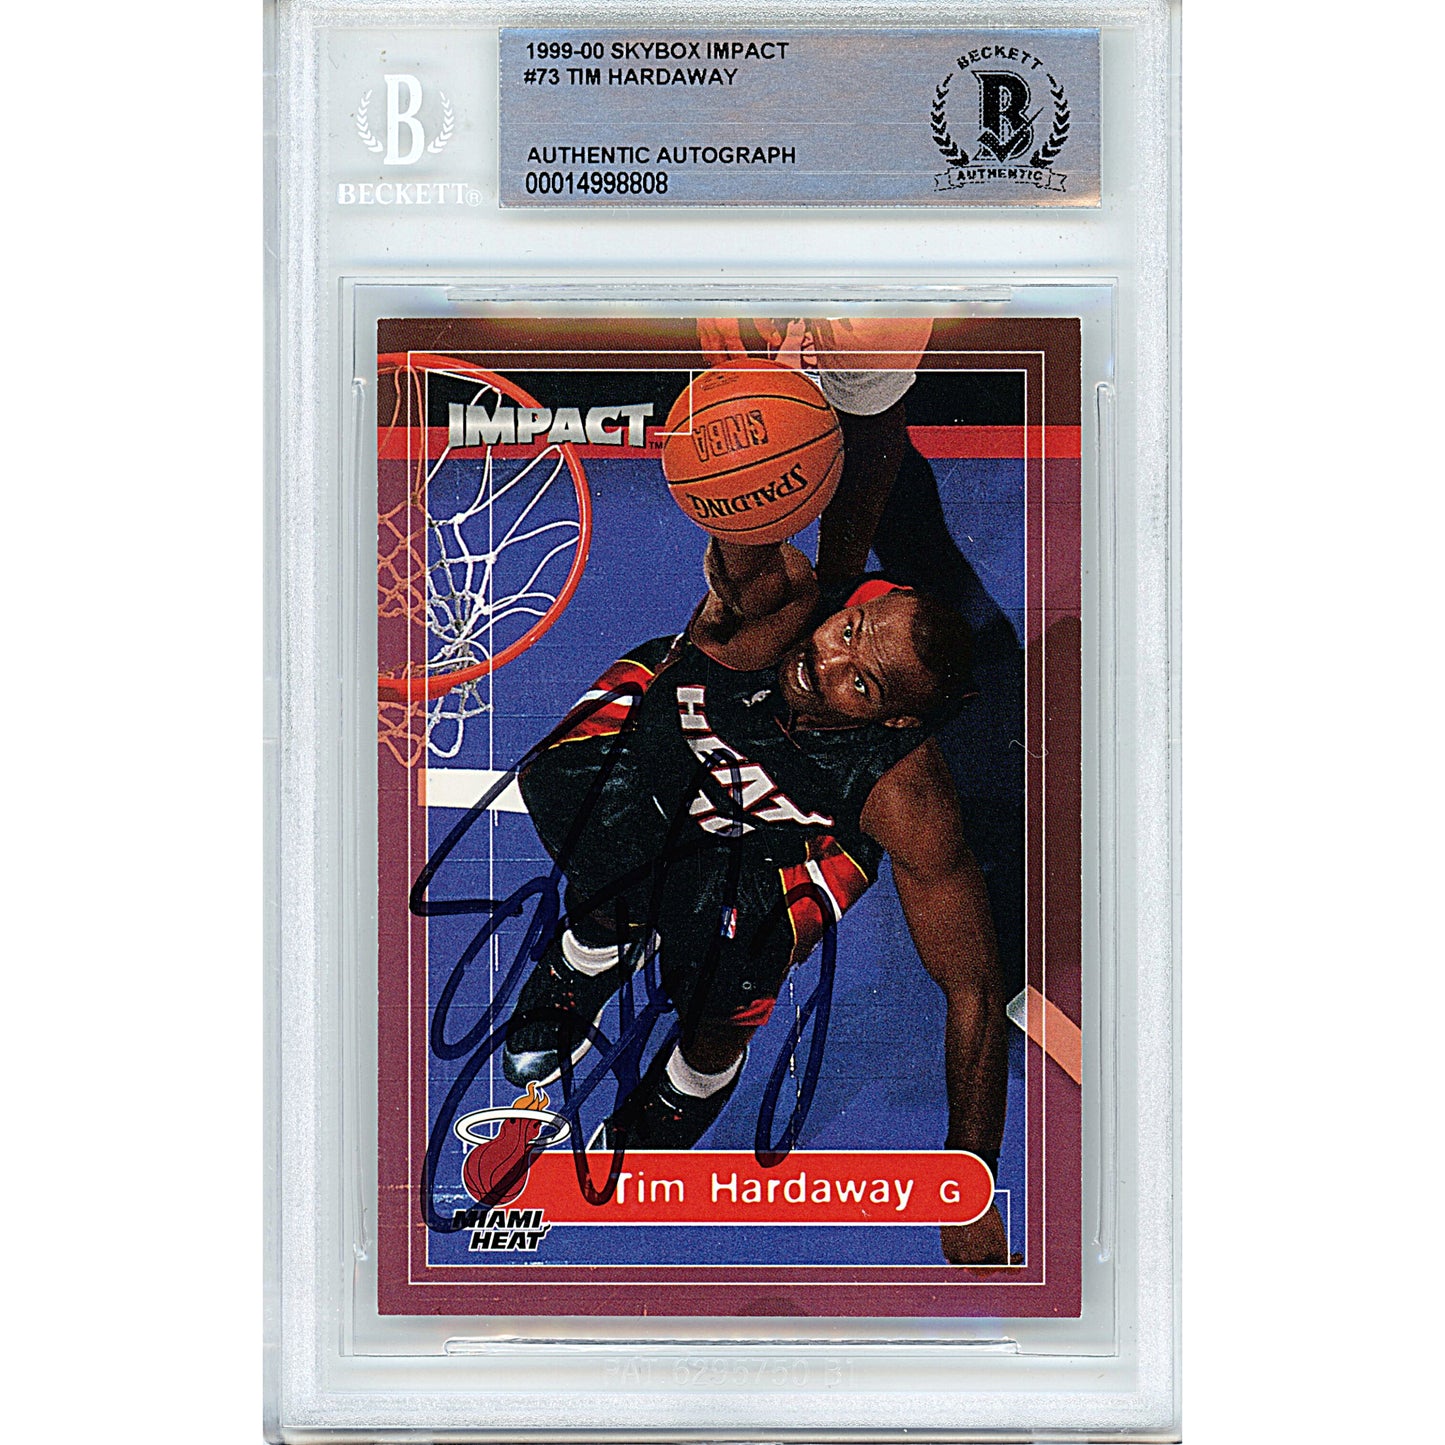 Basketballs- Autographed- Tim Hardaway Signed Miami Heat 1999-2000 Skybox Impact Basketball Card Beckett Authentication Slabbed 00014998808 - 101